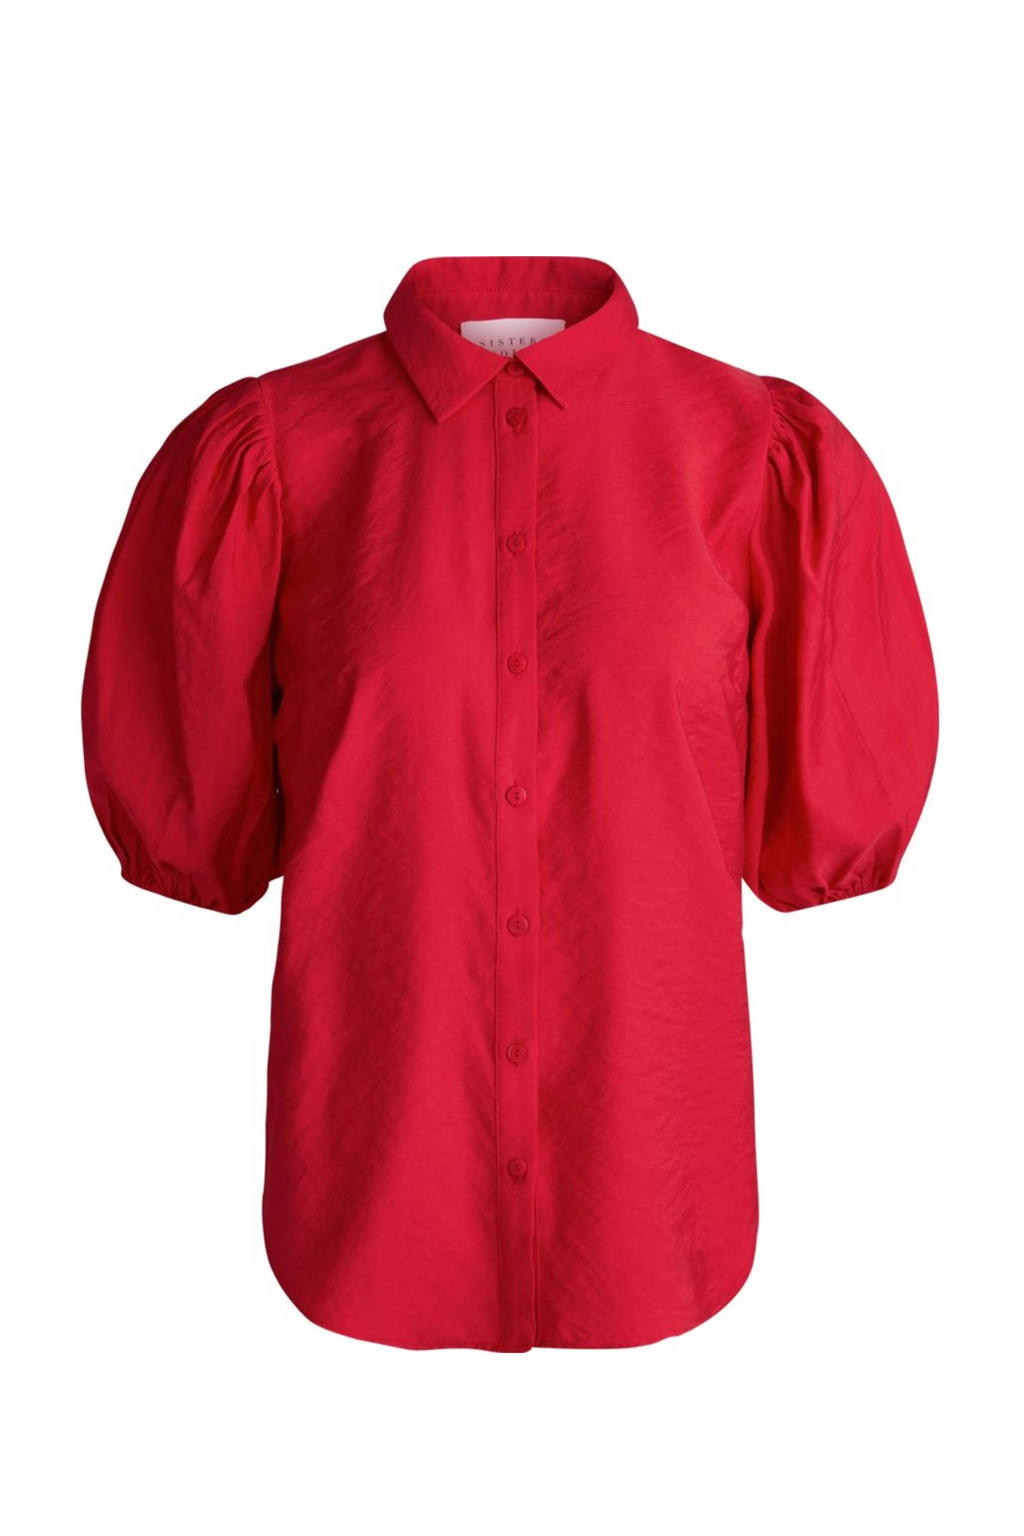 SisterS Point blouse ELLA-SH rood